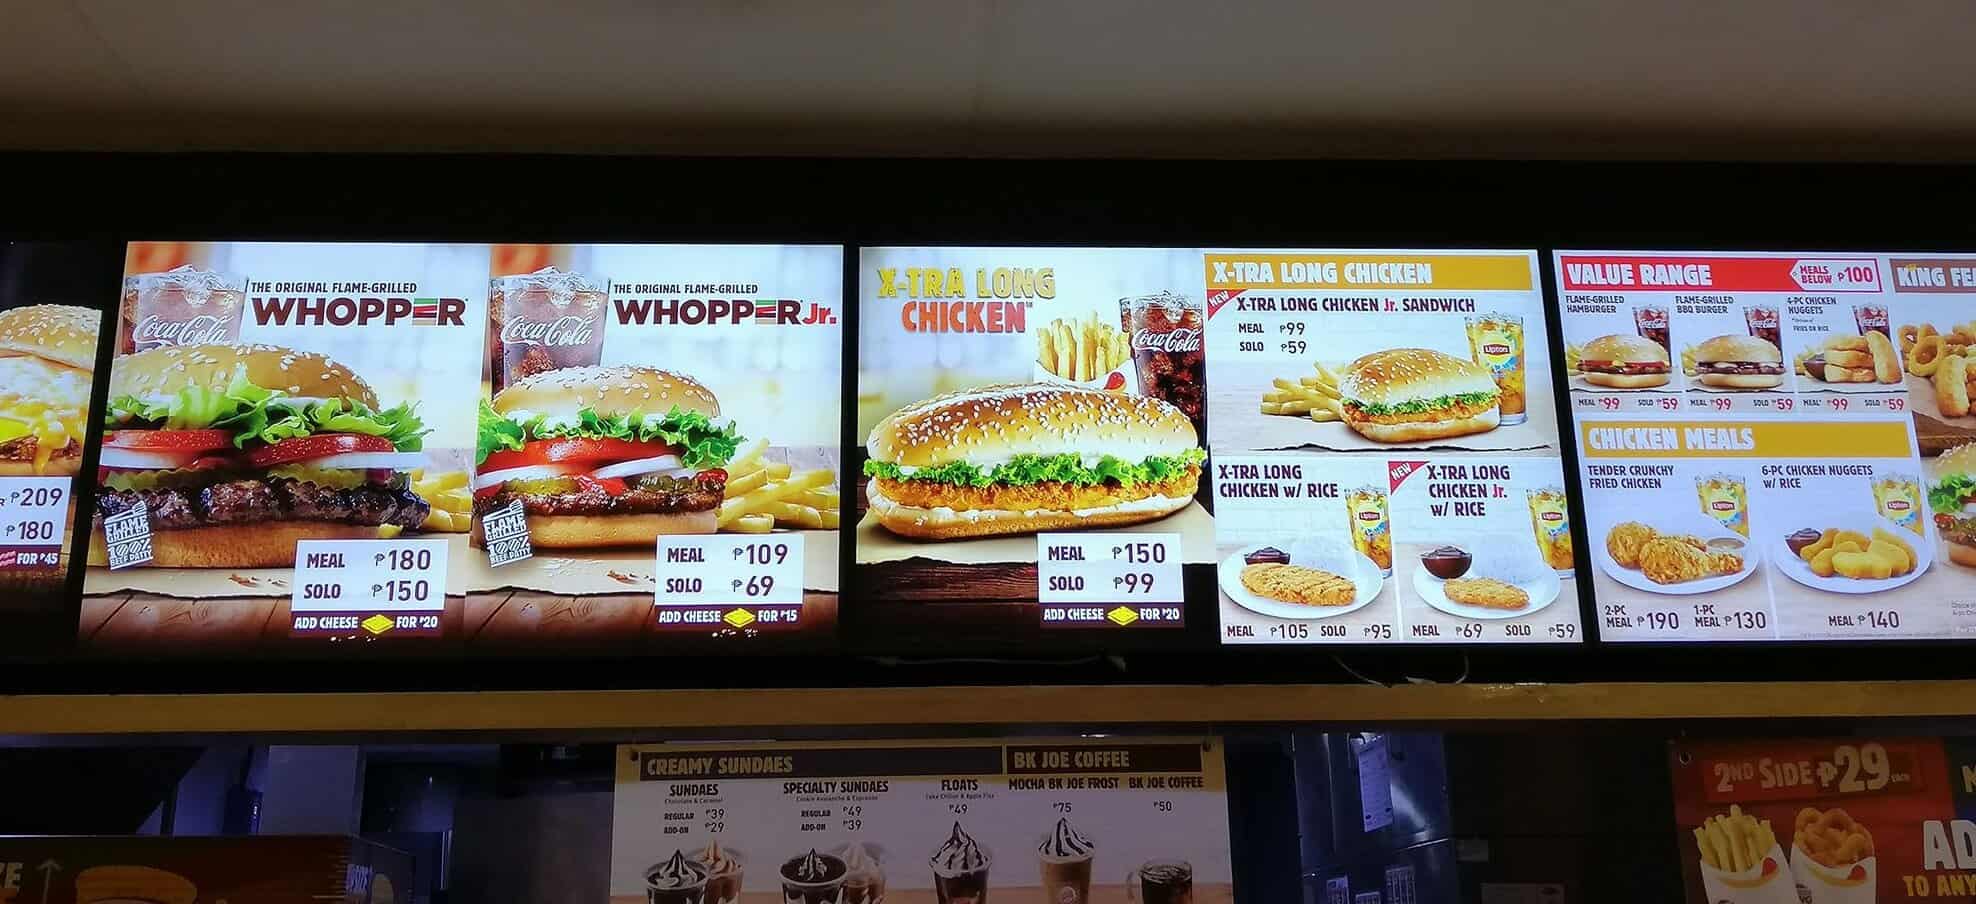 Pictures Of Burger King Menu Prices 2020 Philippines : Burger King Menu